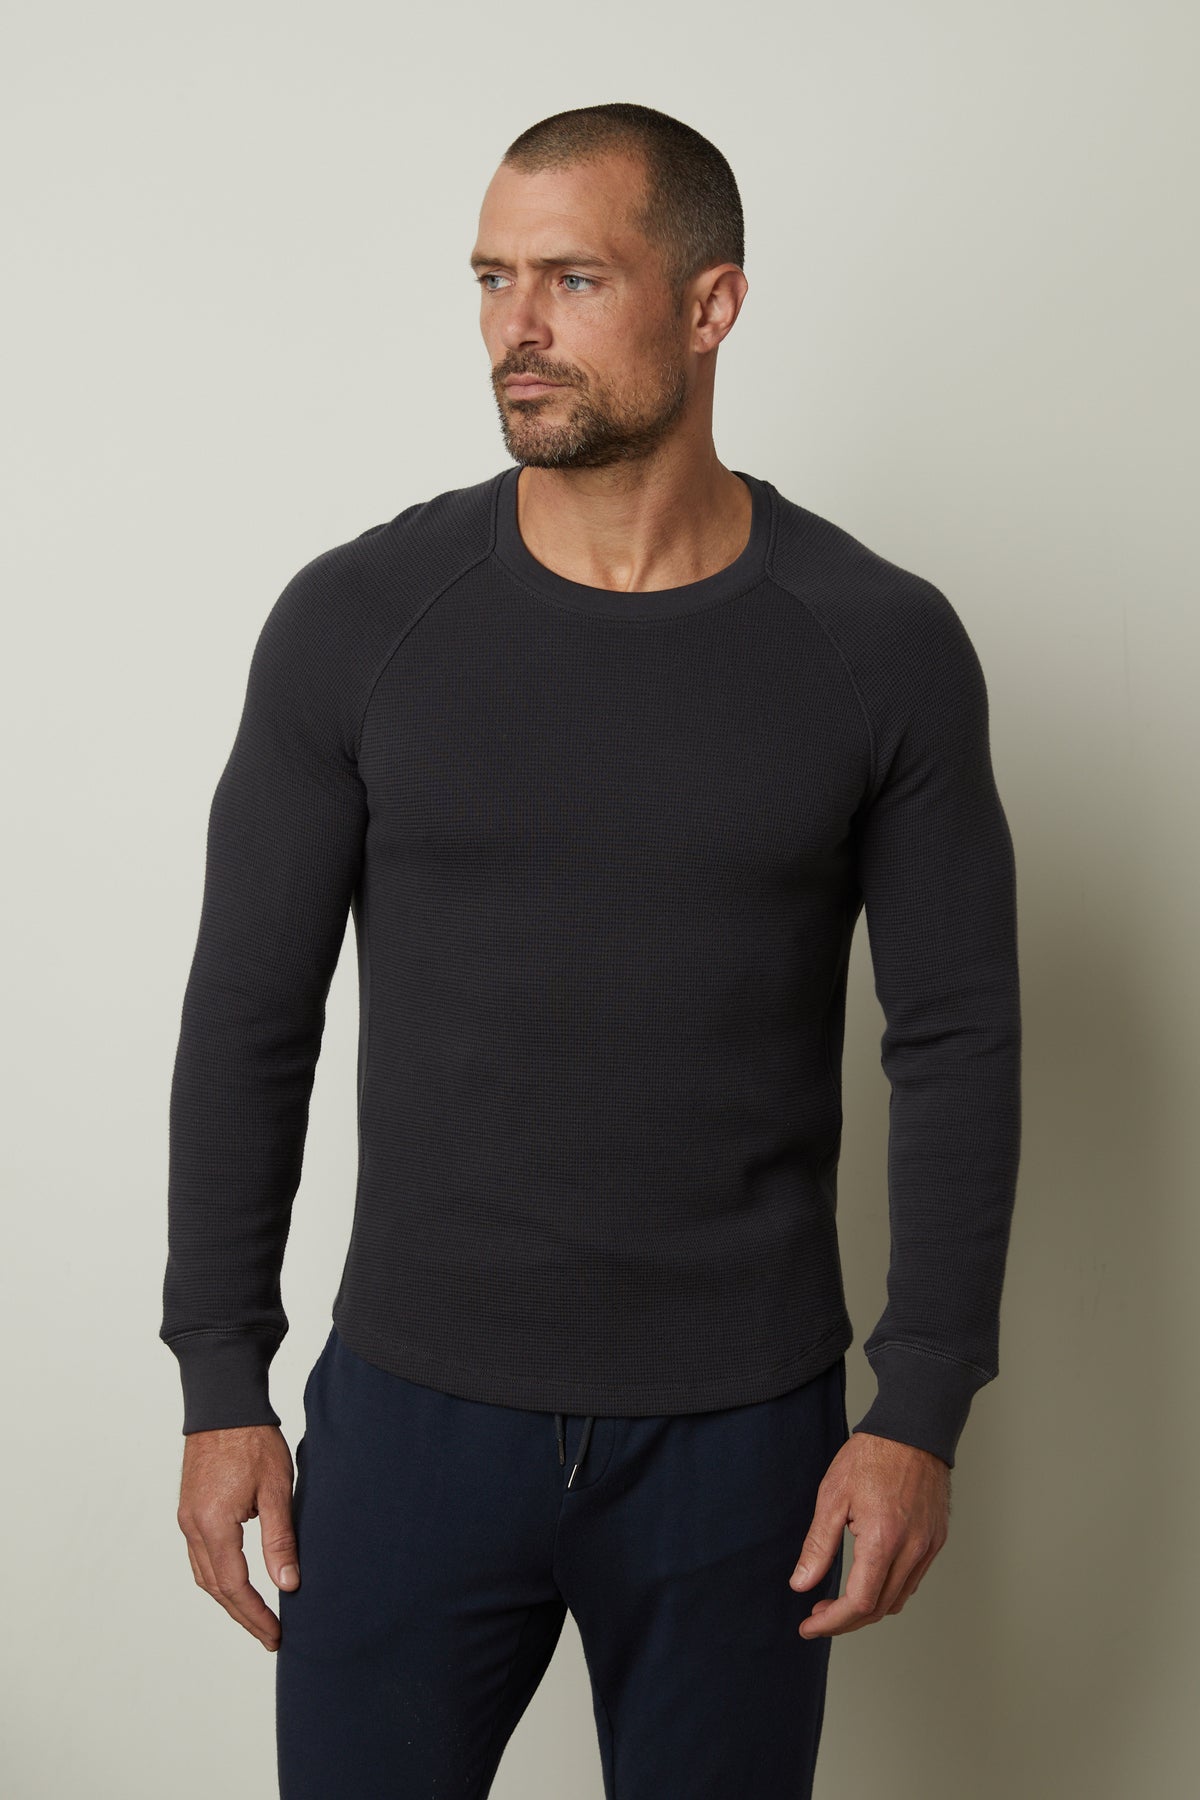 A man wearing a Velvet by Graham & Spencer black sweatshirt, comfortable fit.-35231540183233